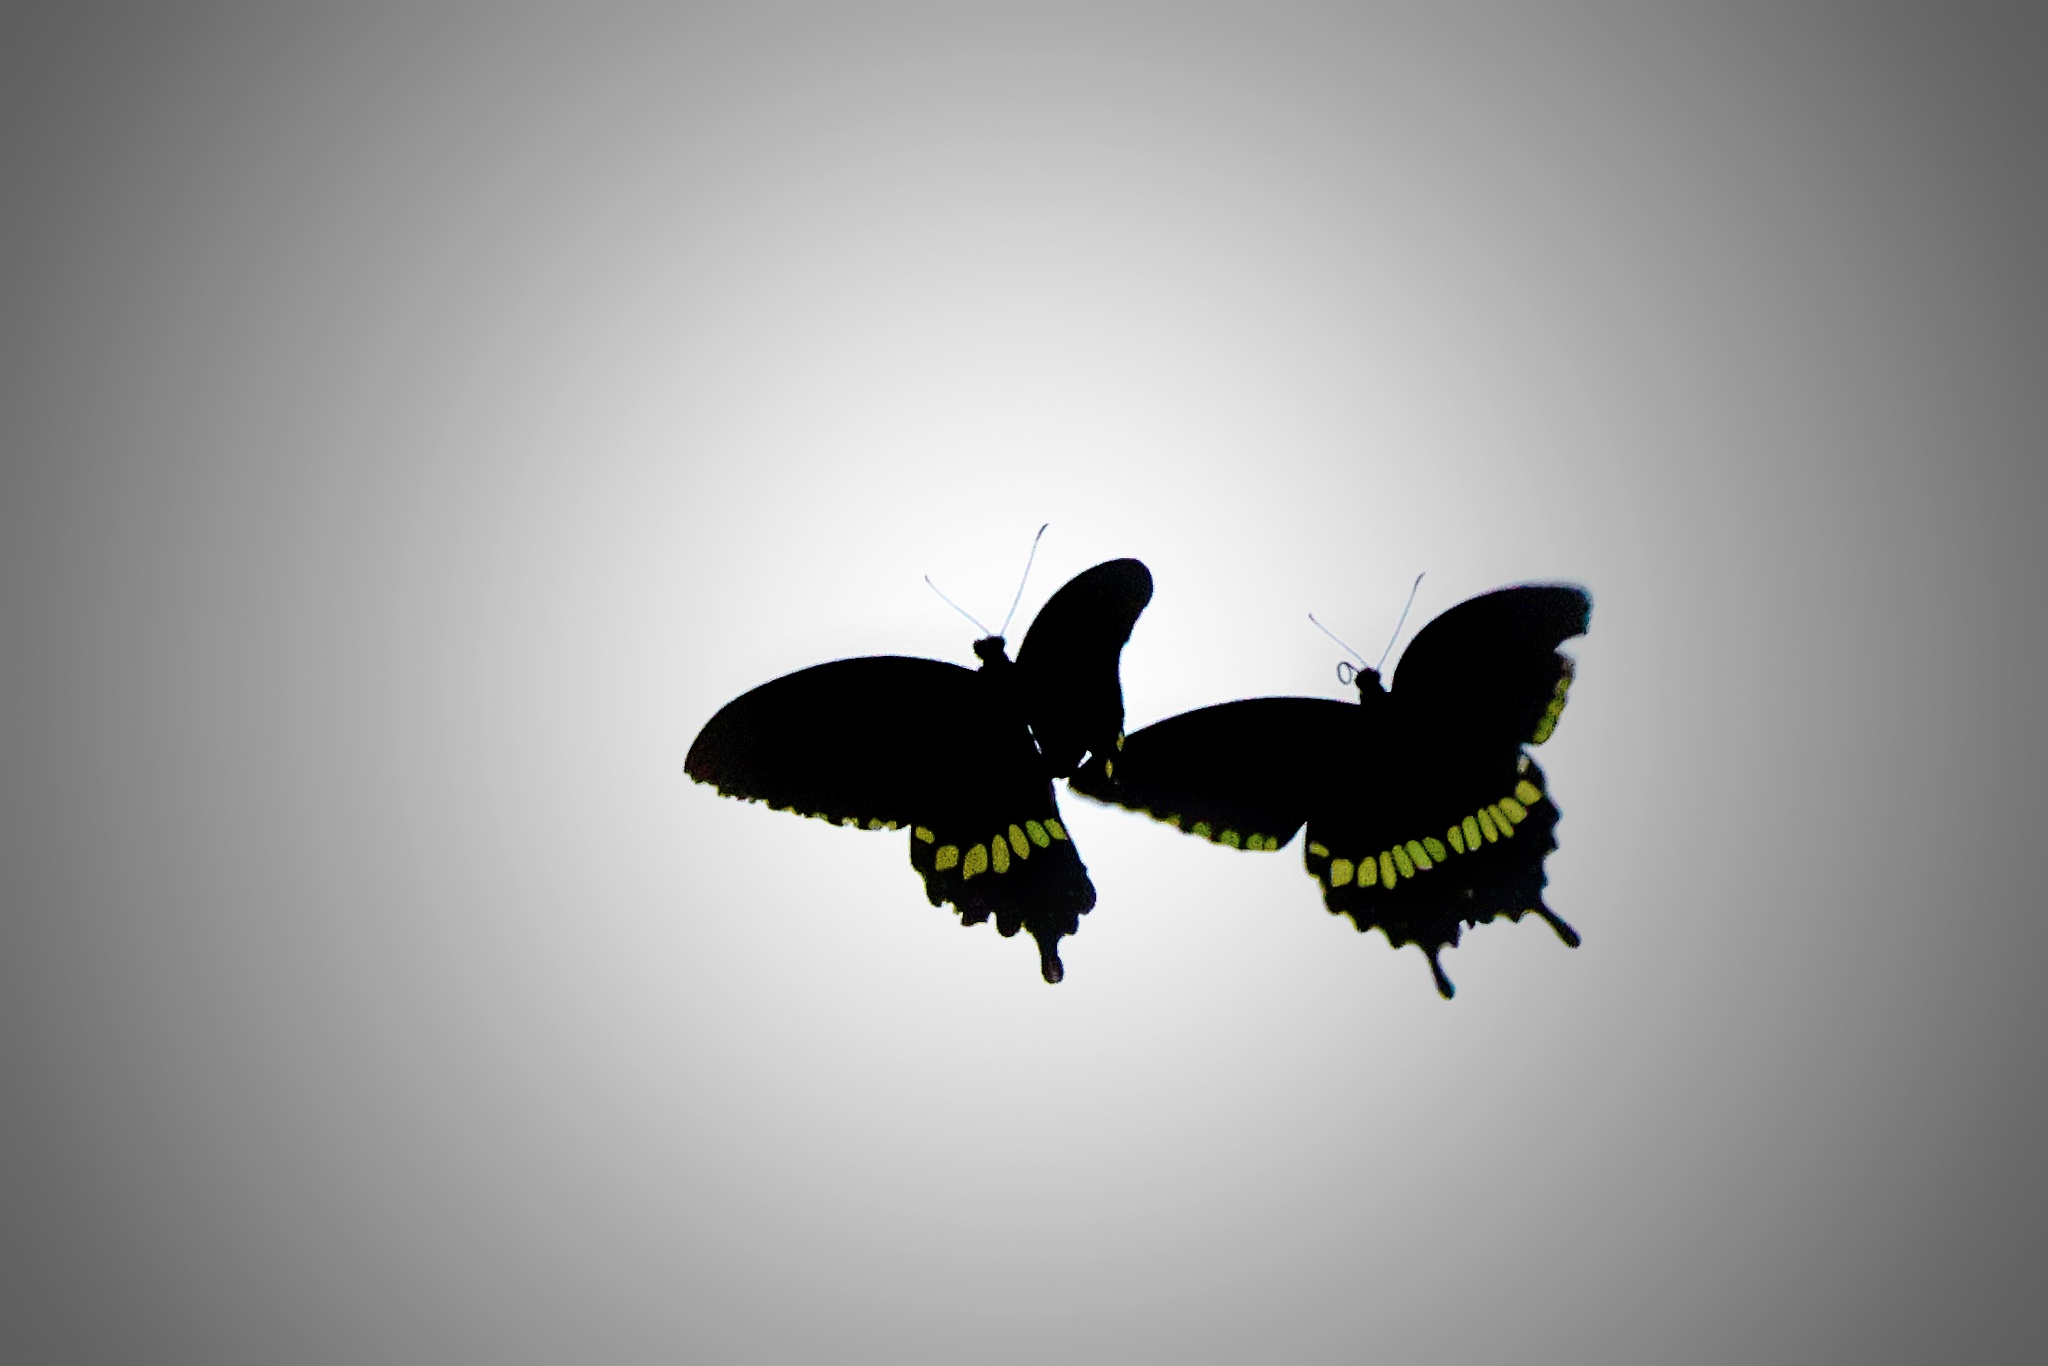 A pair of flying butterflies